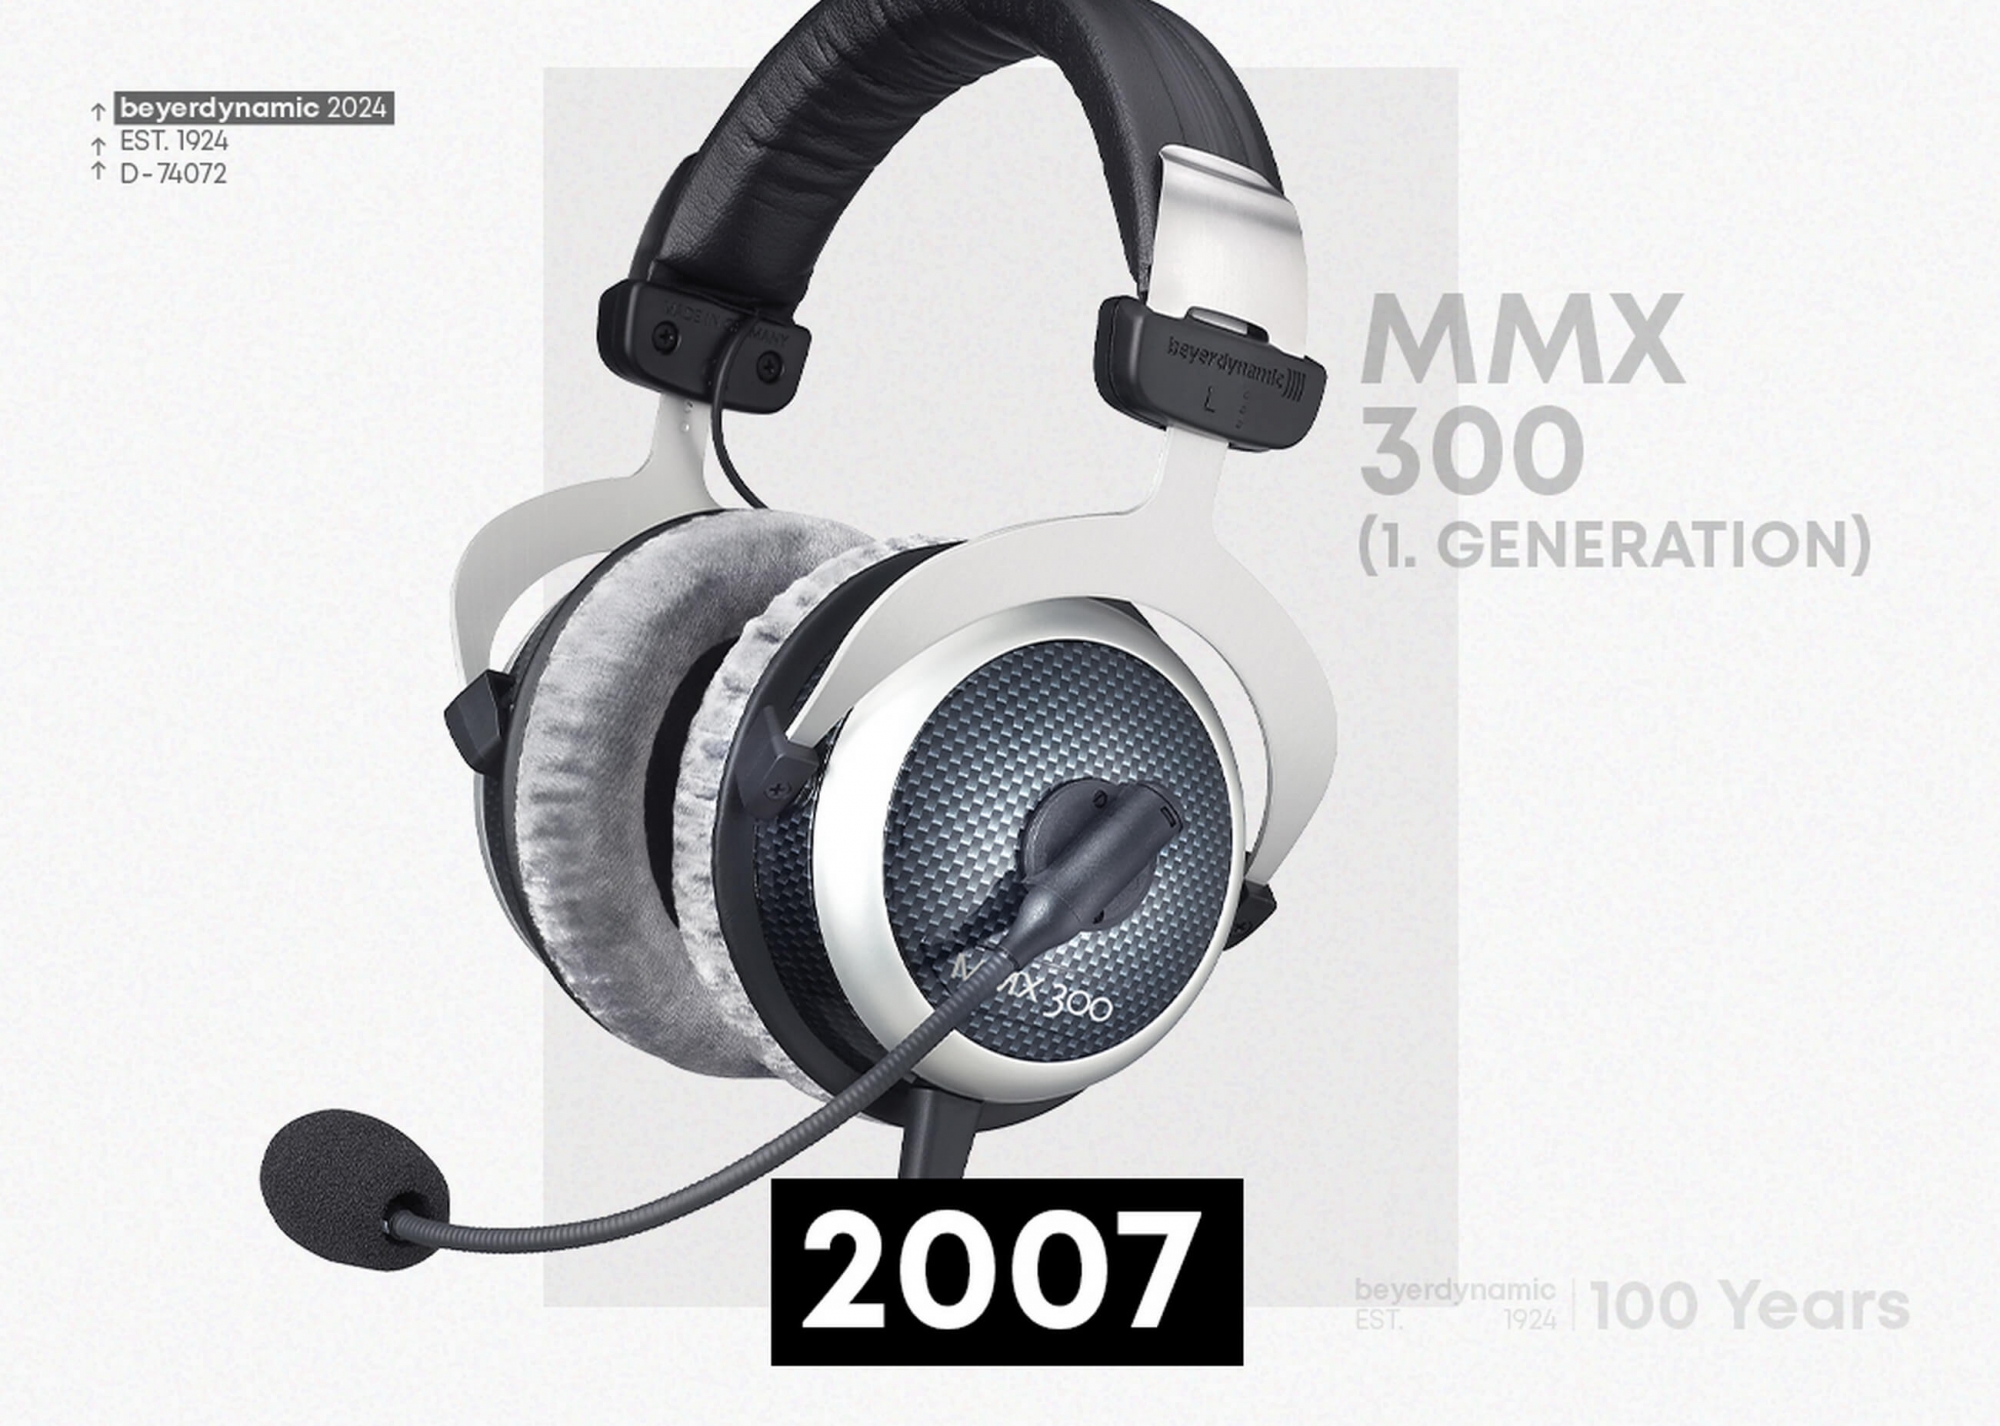 Beyerdynamic MMX 300 fejhallgató 2007-ben